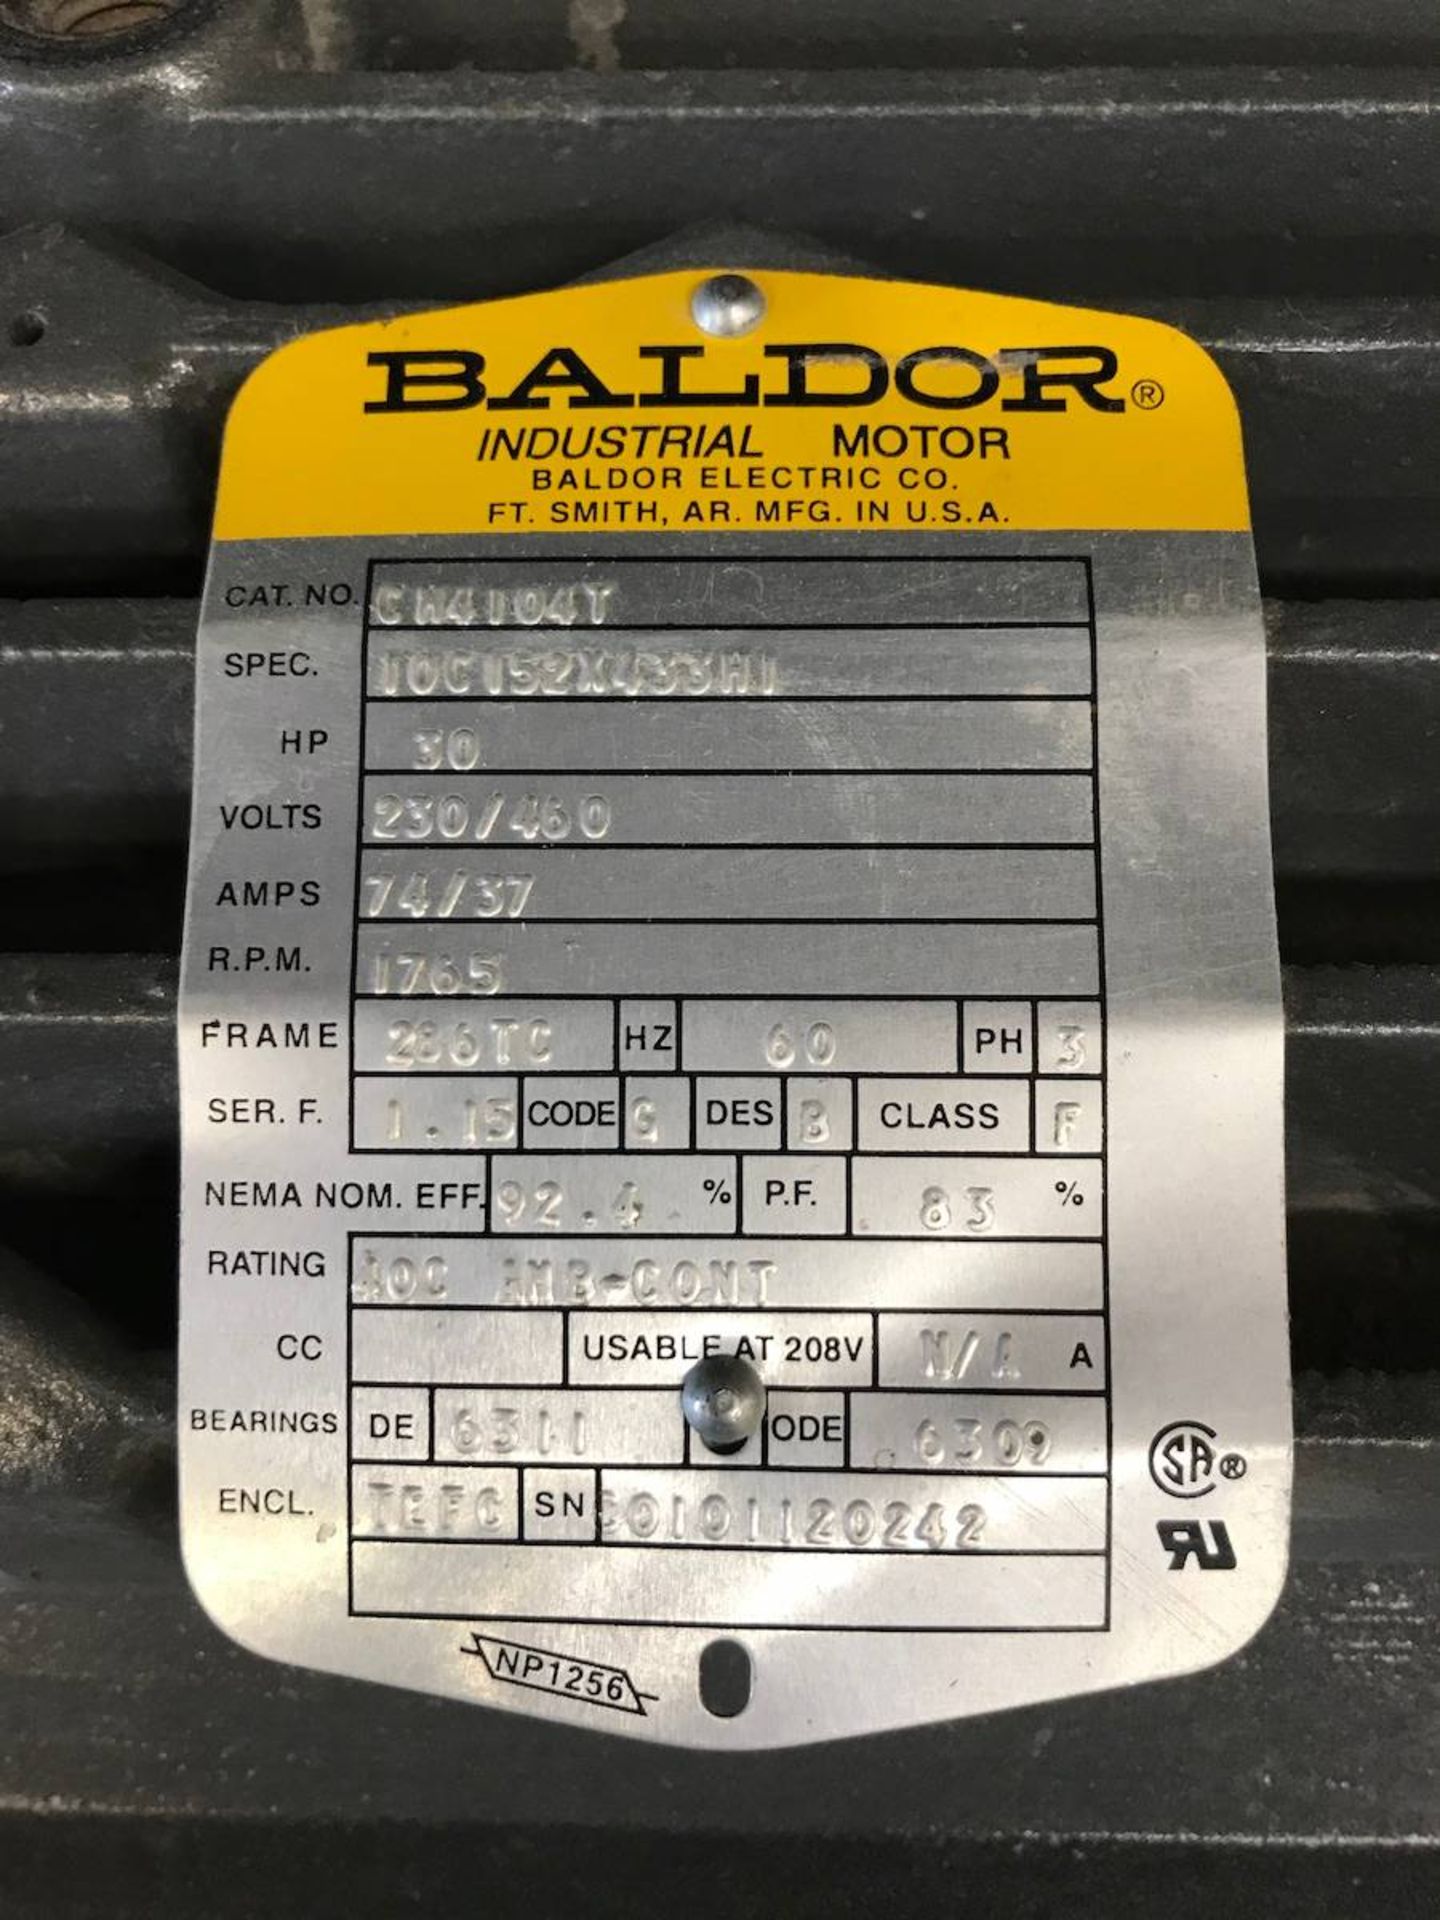 Baldor Industrial Motor - Image 2 of 2